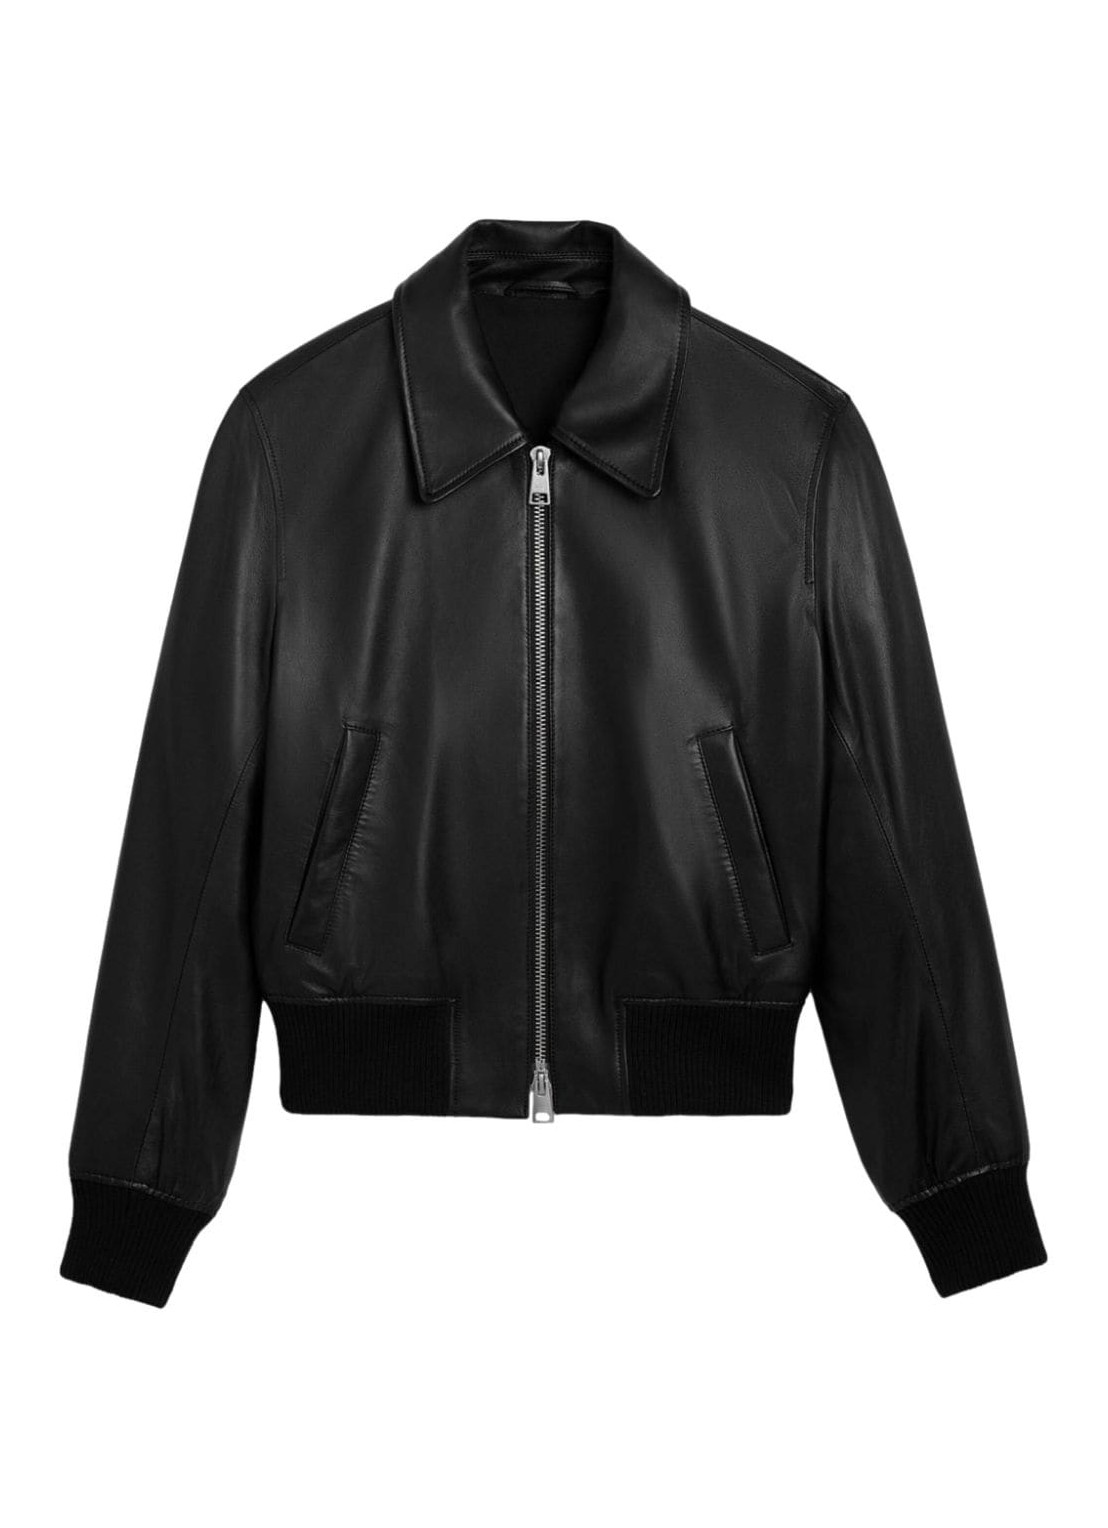 Outerwear ami outerwear manzipped jacket - ujk028lh0029 001 talla M
 